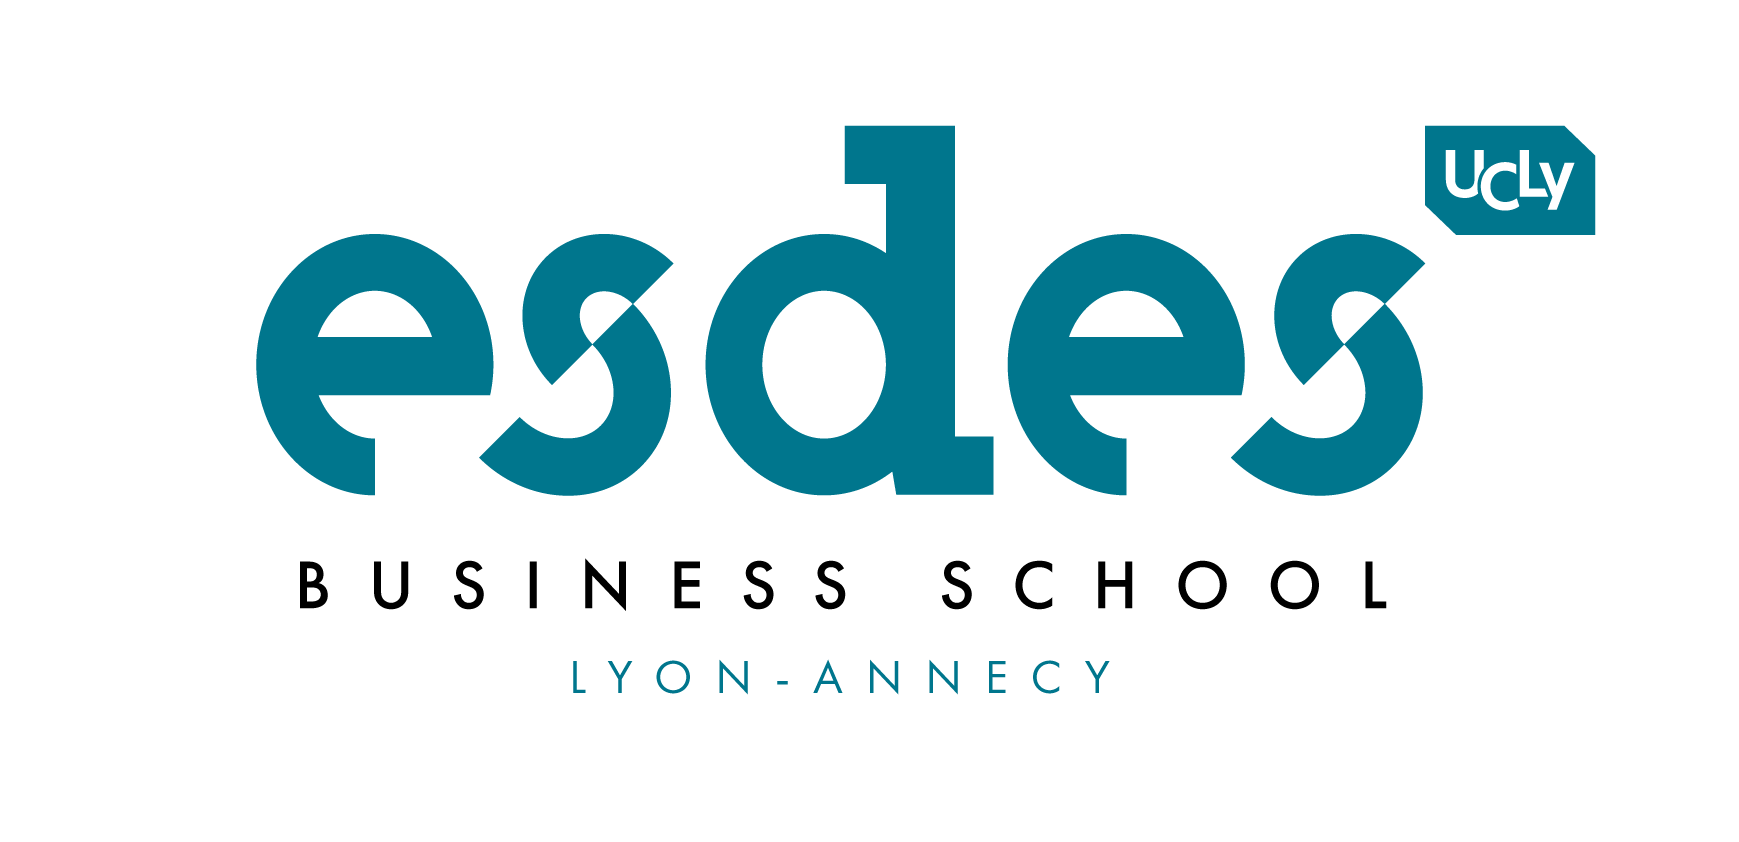 ESDES Lyon Business School